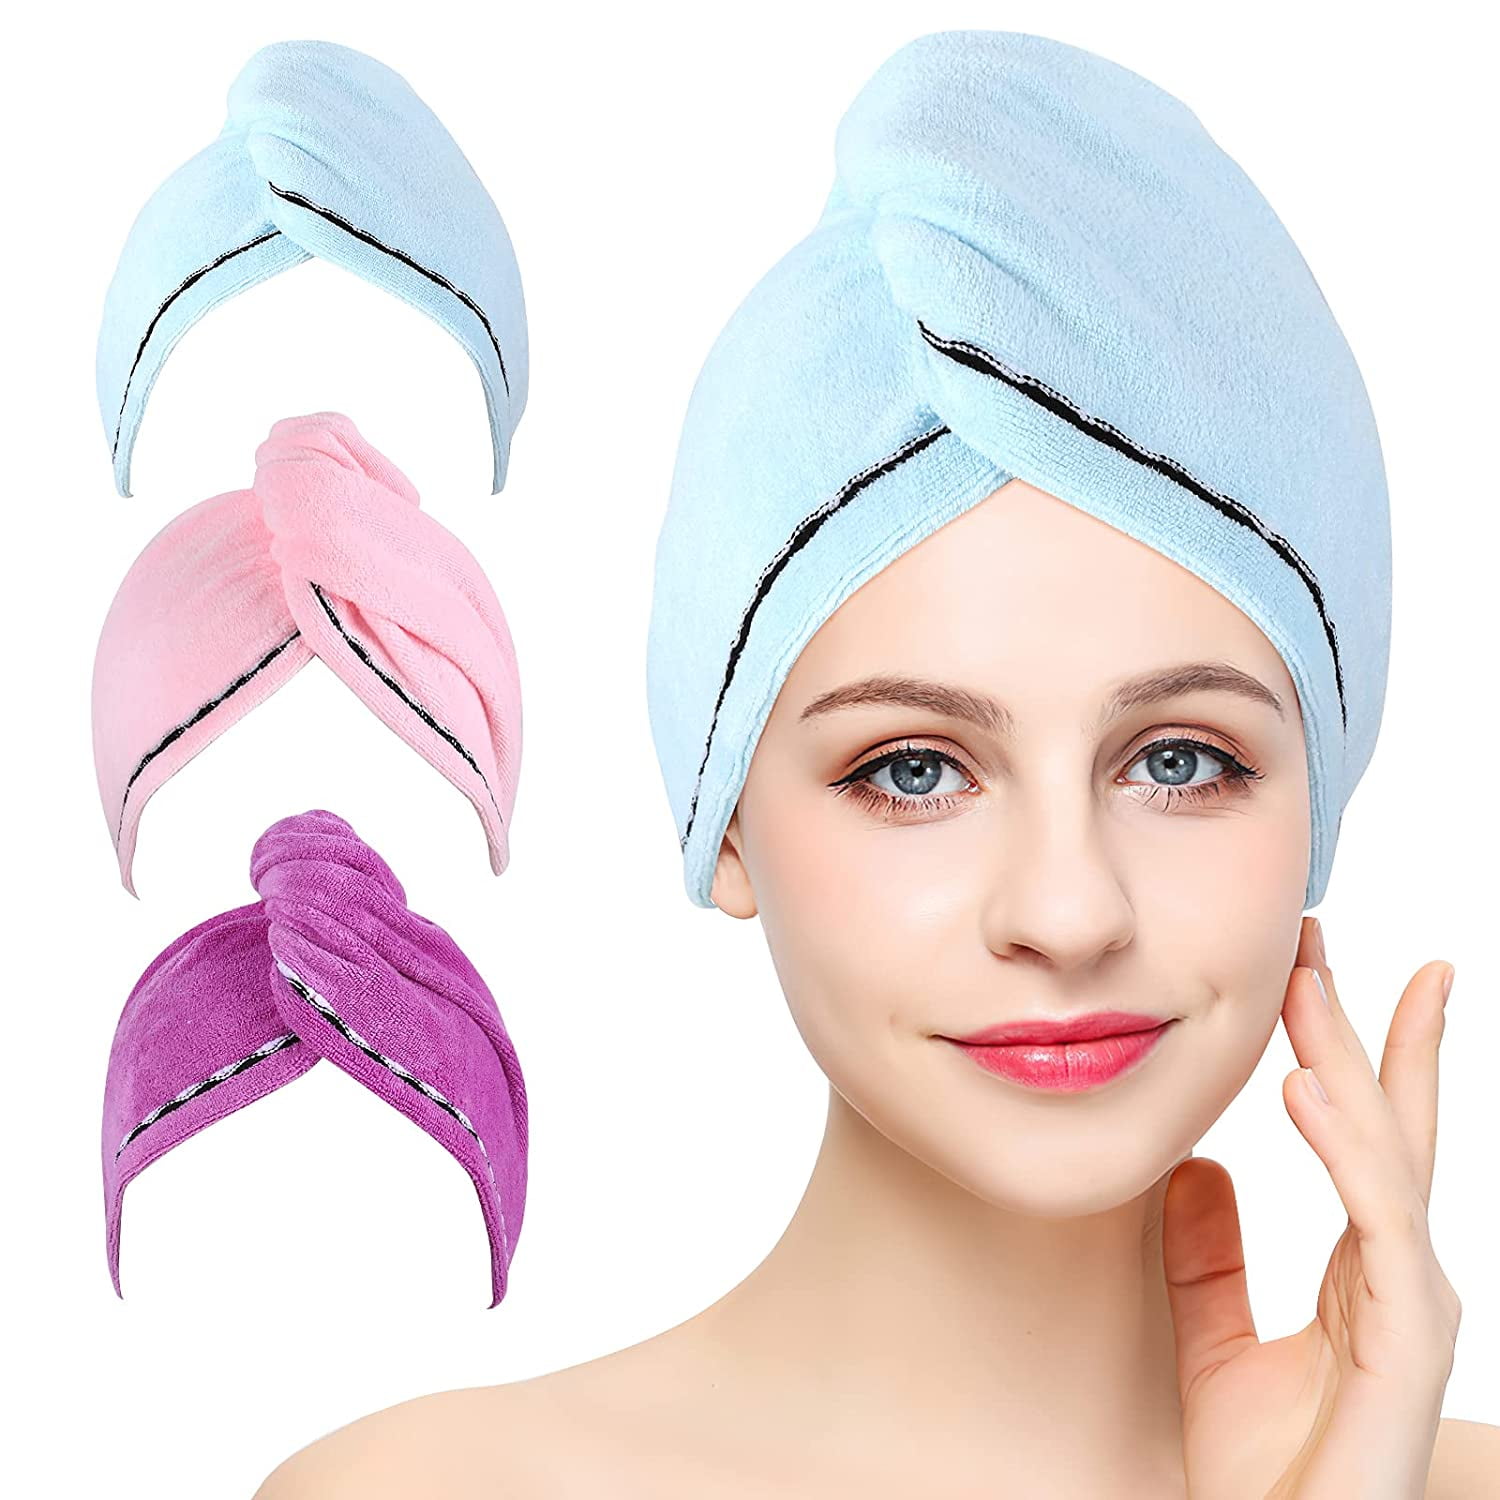 Hair Towel Turban Hat Quick Dry Soft Microfibre Drying Turban Wrap Loop Women UK 